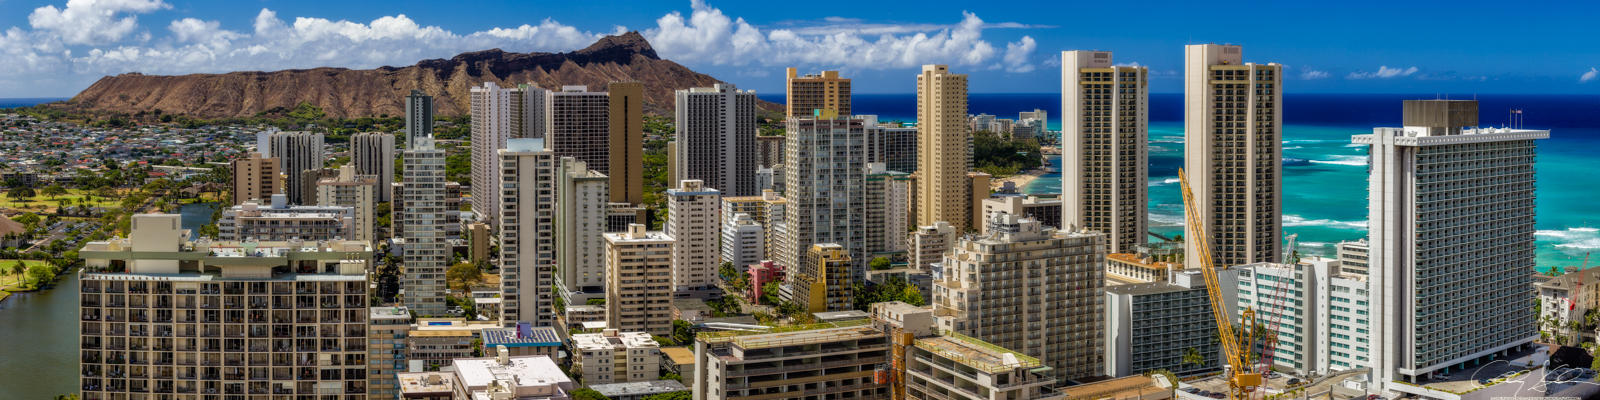 Waikiki View by AndrewShoemaker